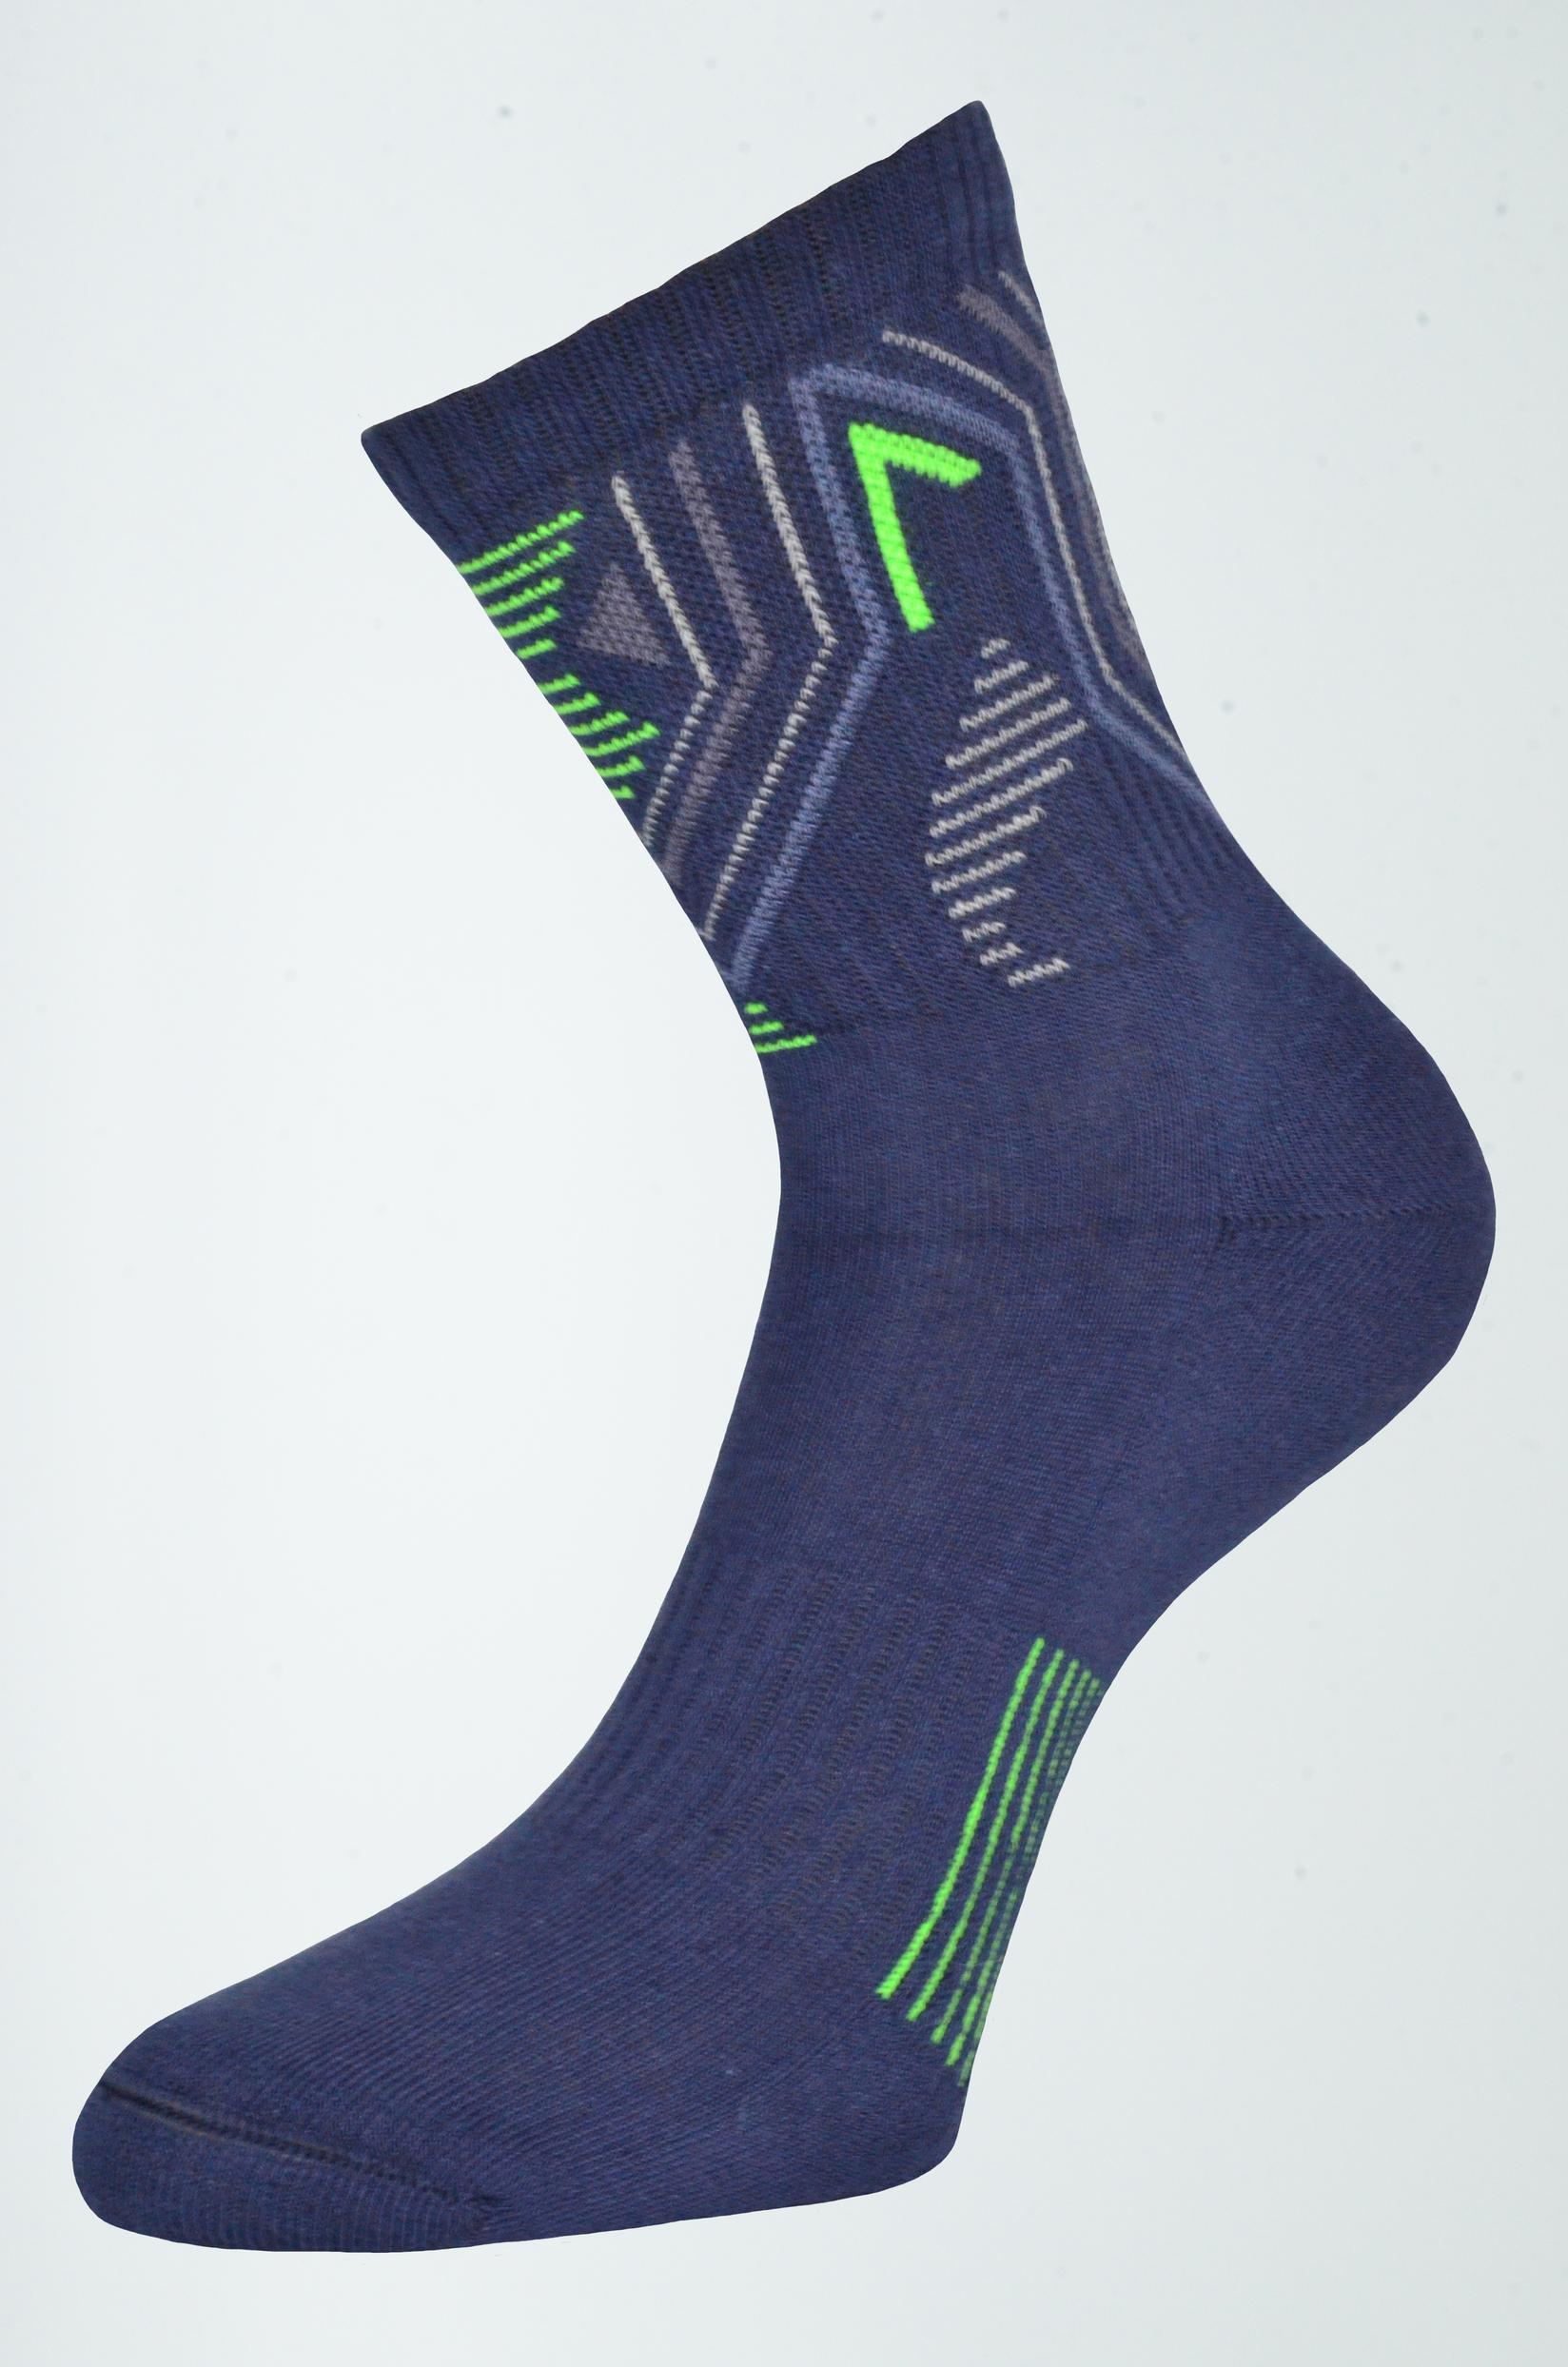 Selected image for GERBI Sportske čarape Sport Style  42-44 m9 teget